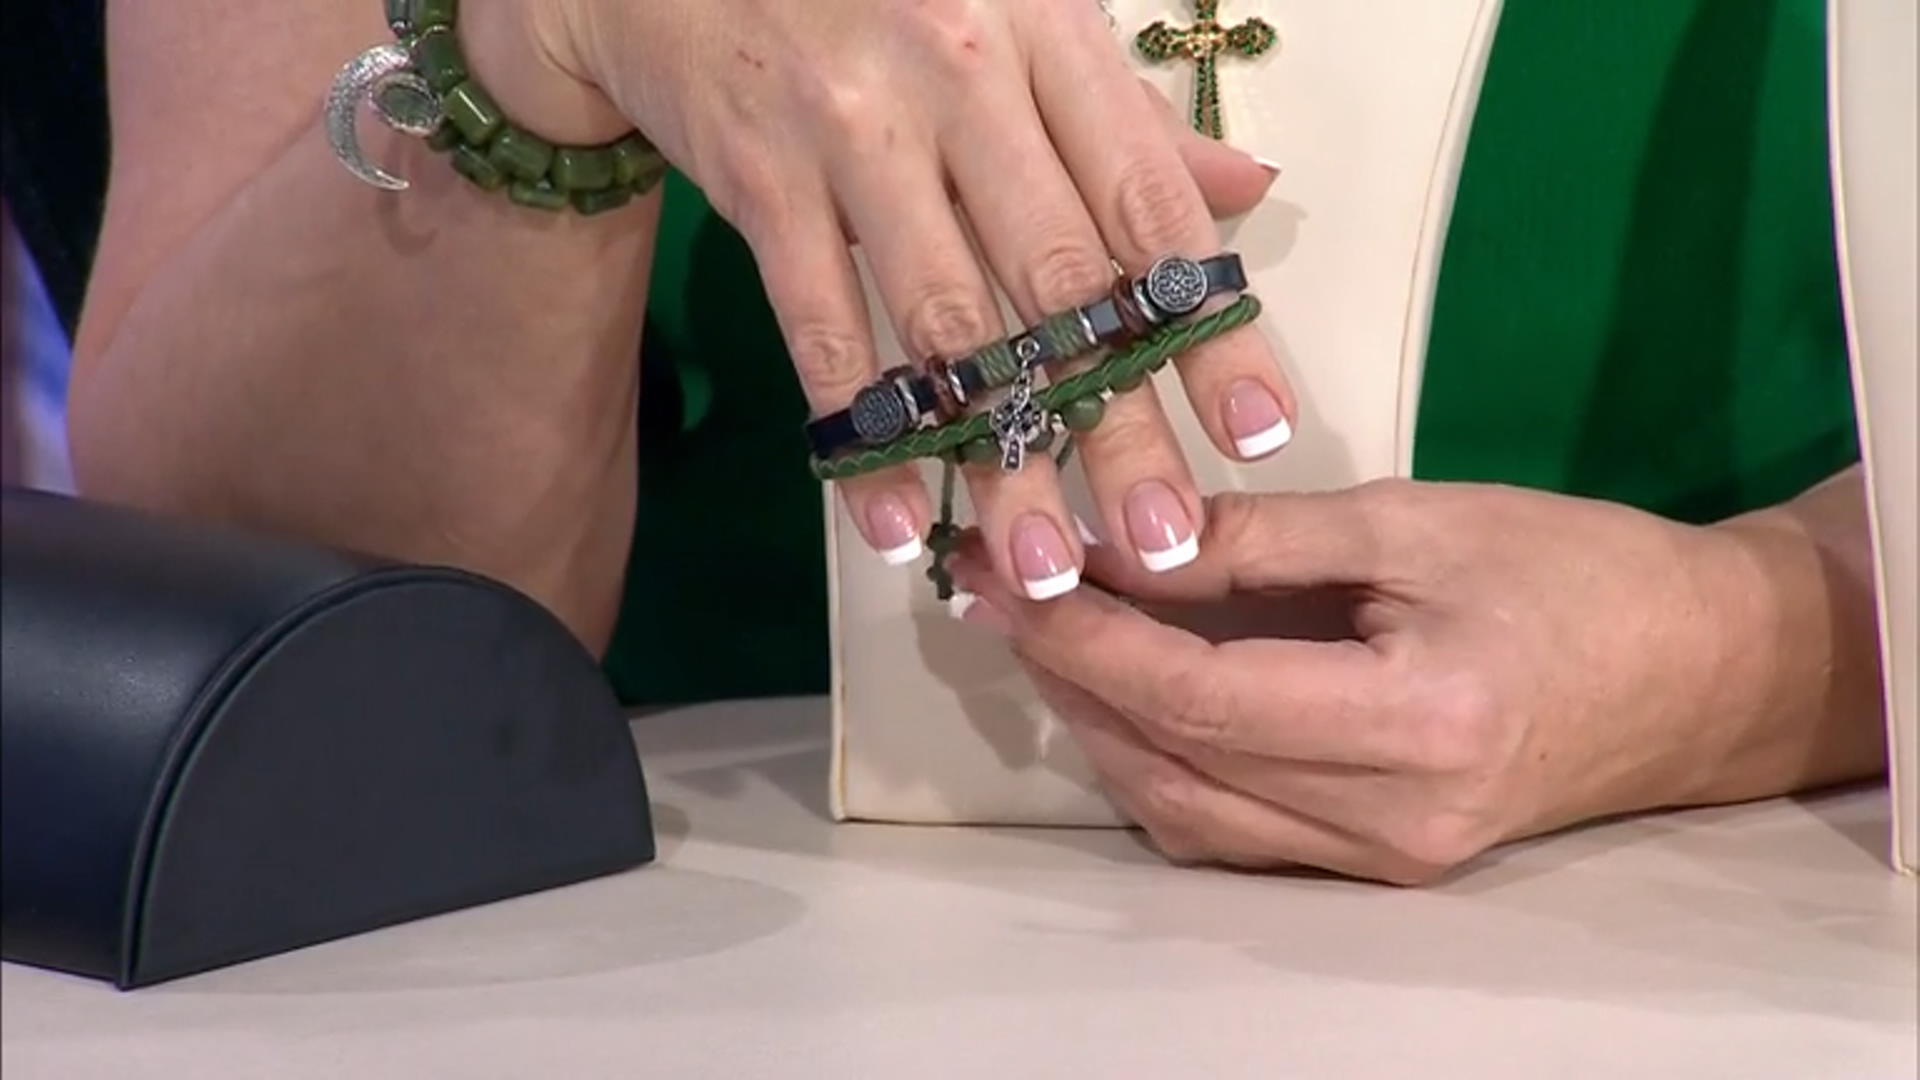 Green Connemara Marble Leather Bracelet Video Thumbnail